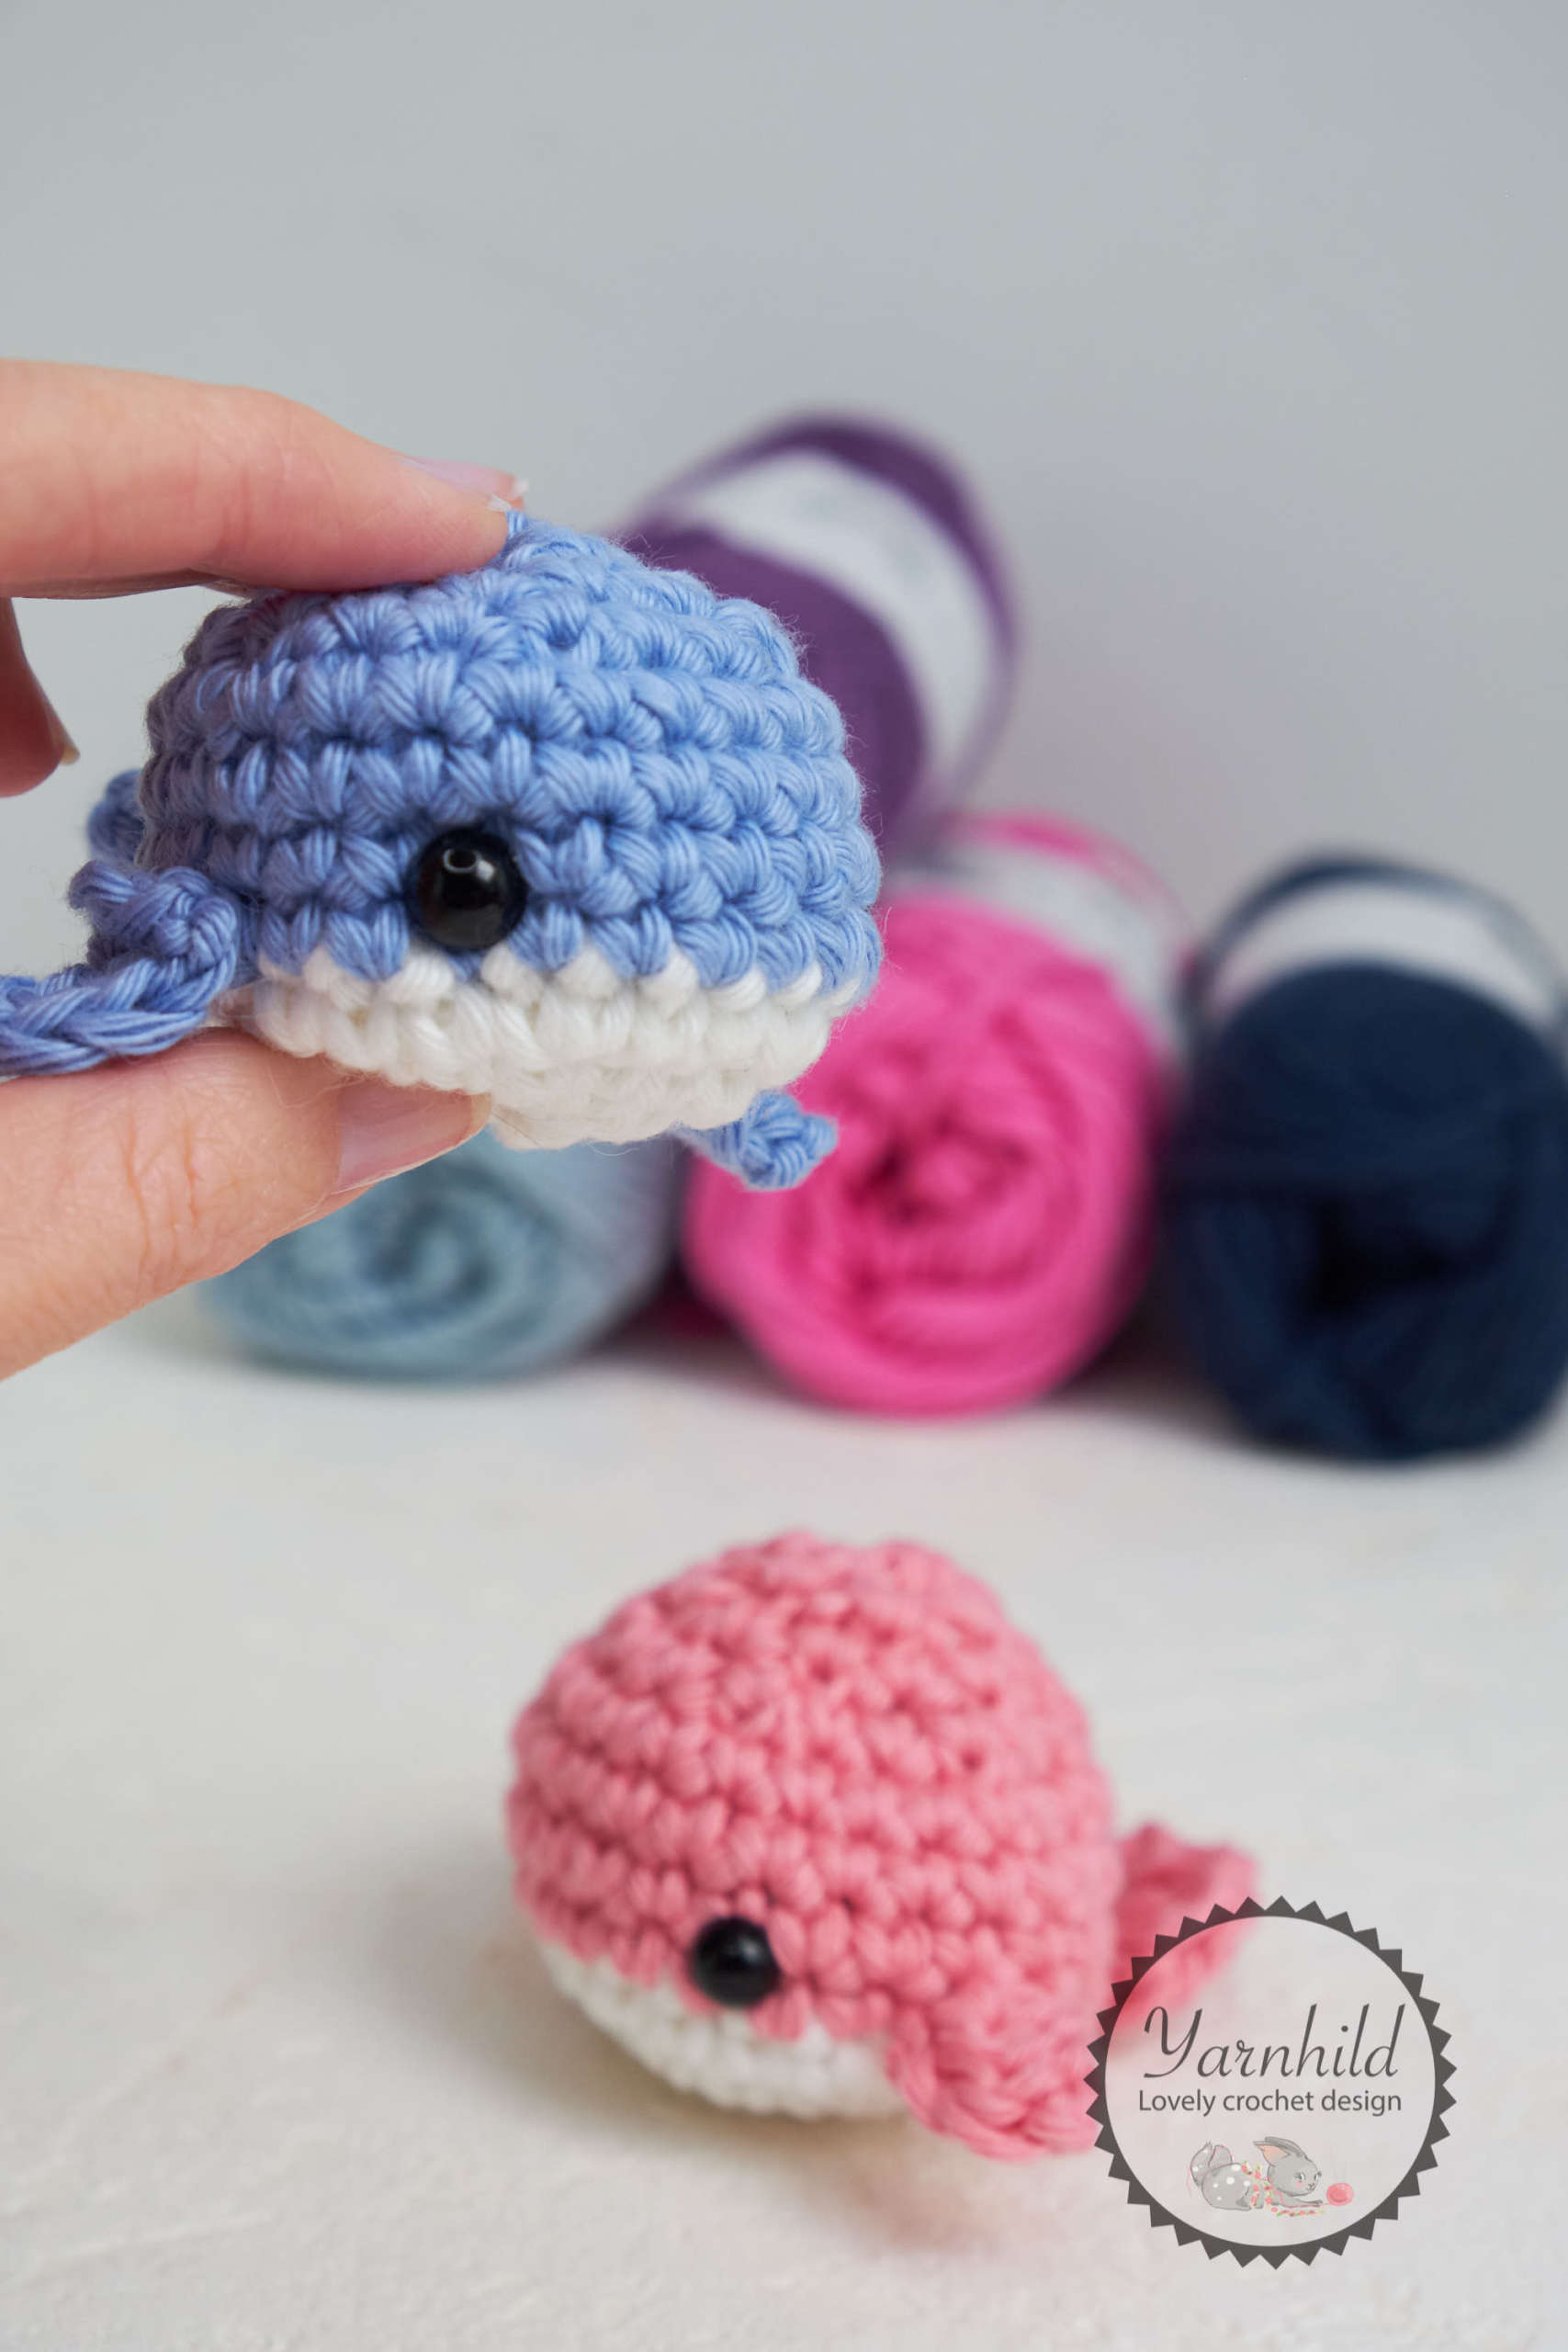 How to crochet an amigurumi whale   A free crochet pattern